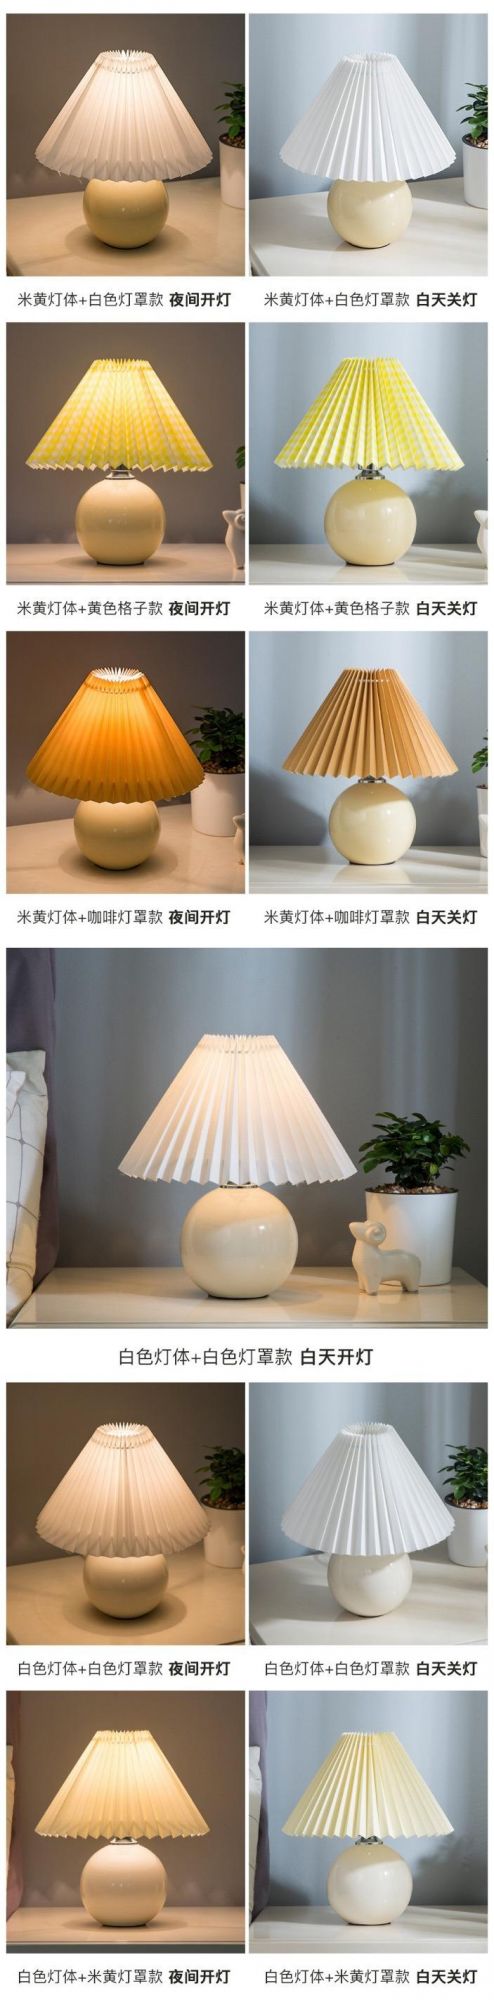 LED Desk Lamp Vintage Pleated Table Lamp Ins LED Table Lamp